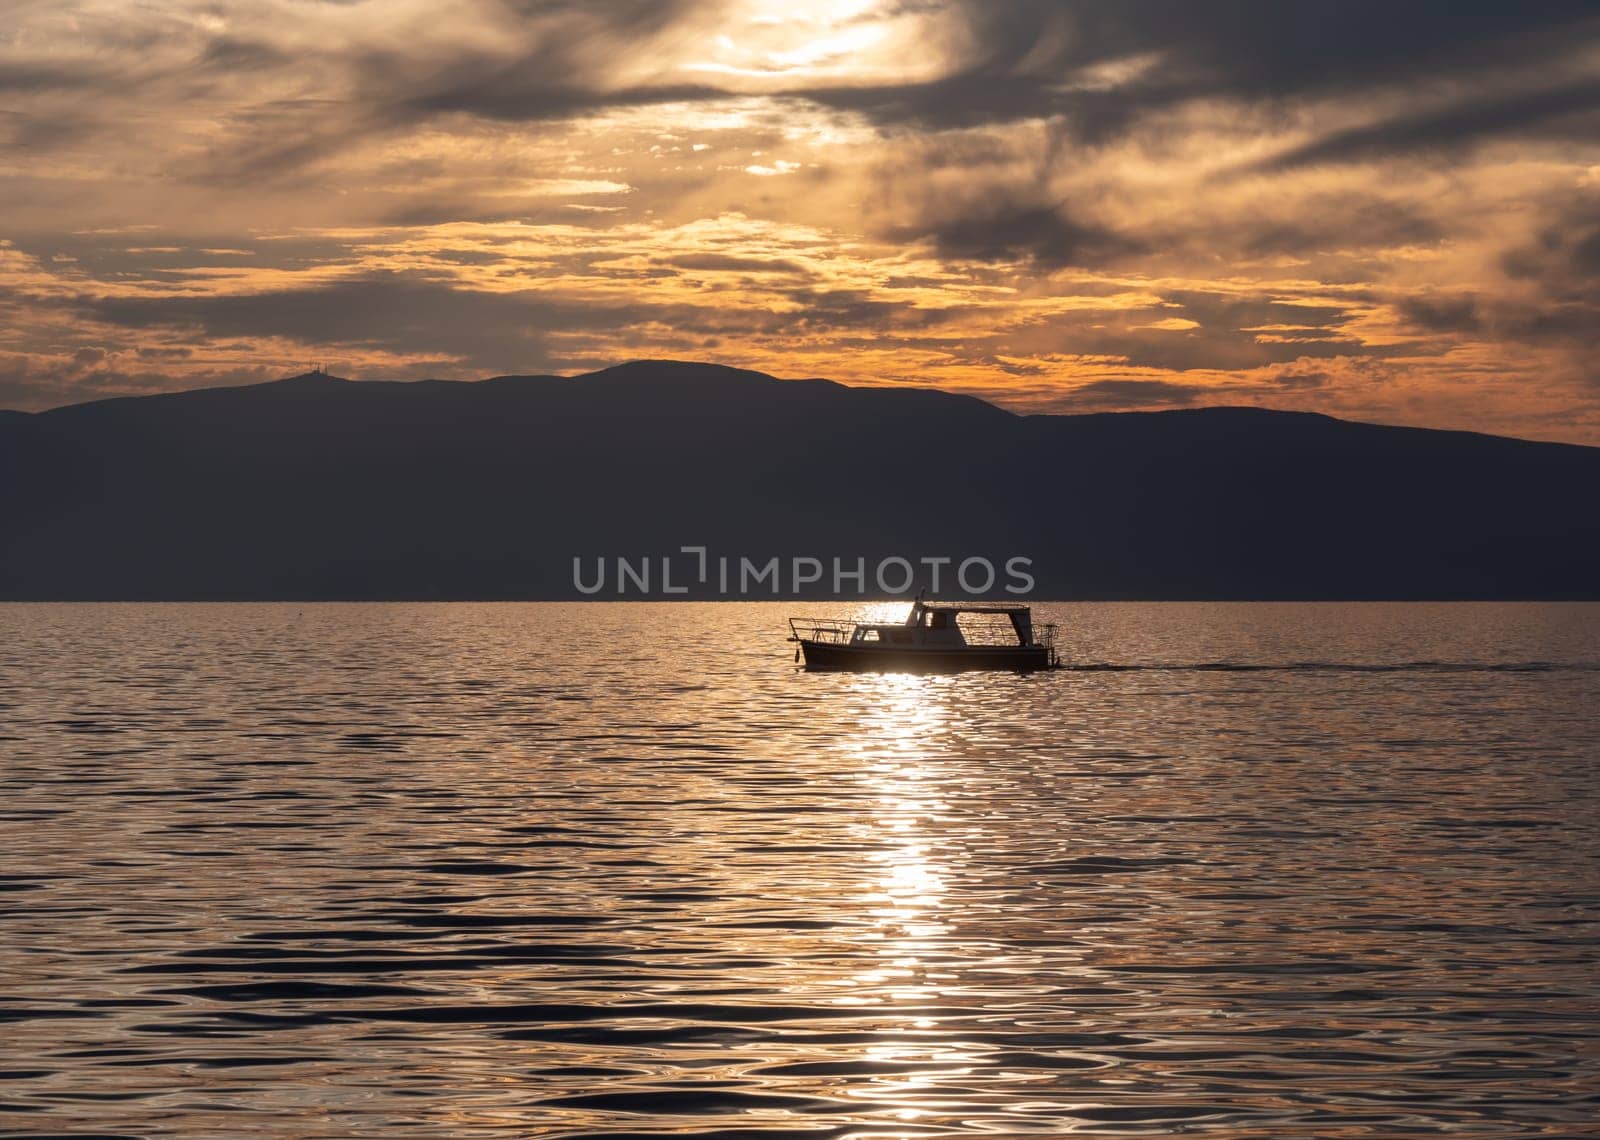 small tourist boat sails on a lake at sunset